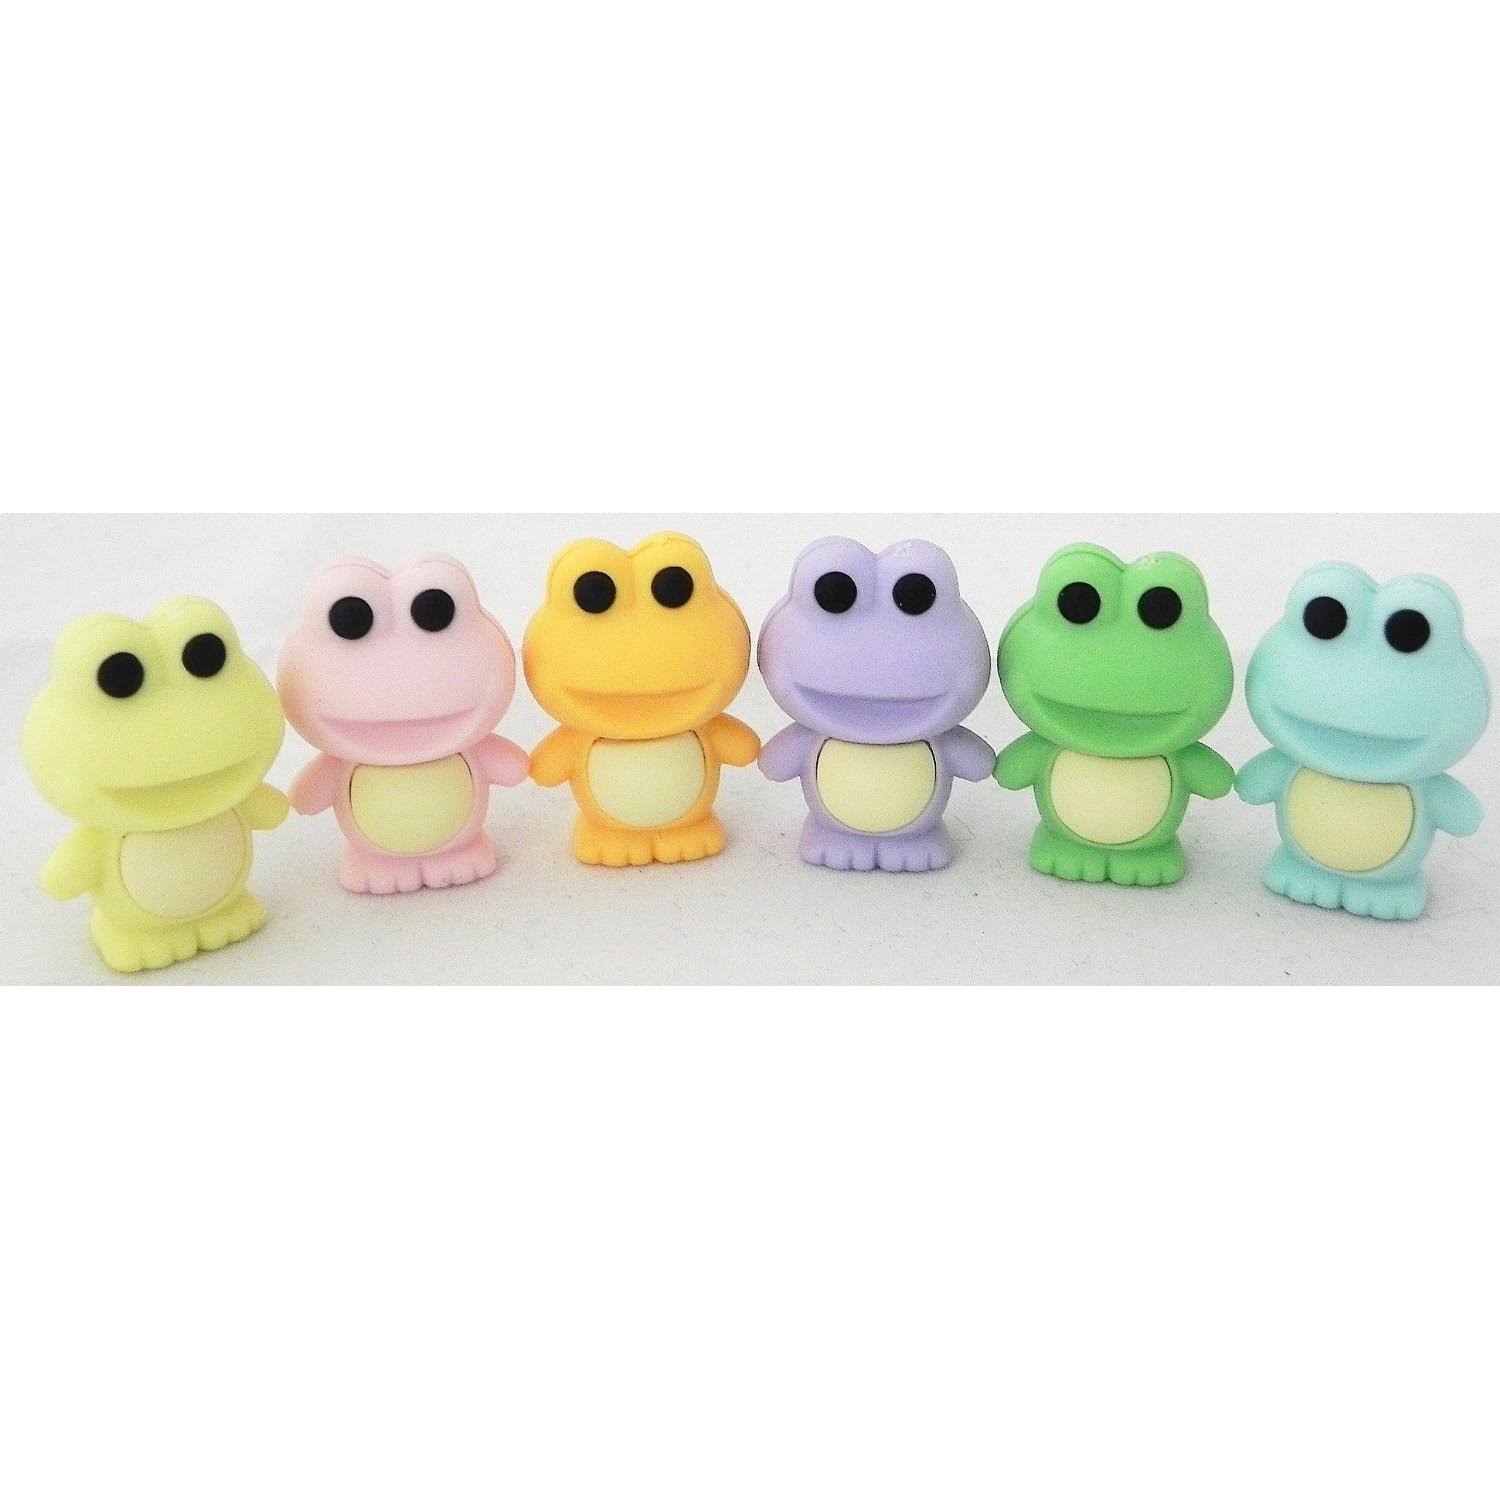 Frog Eraser Made in Japan Iwako 6pcs, Color May Vary